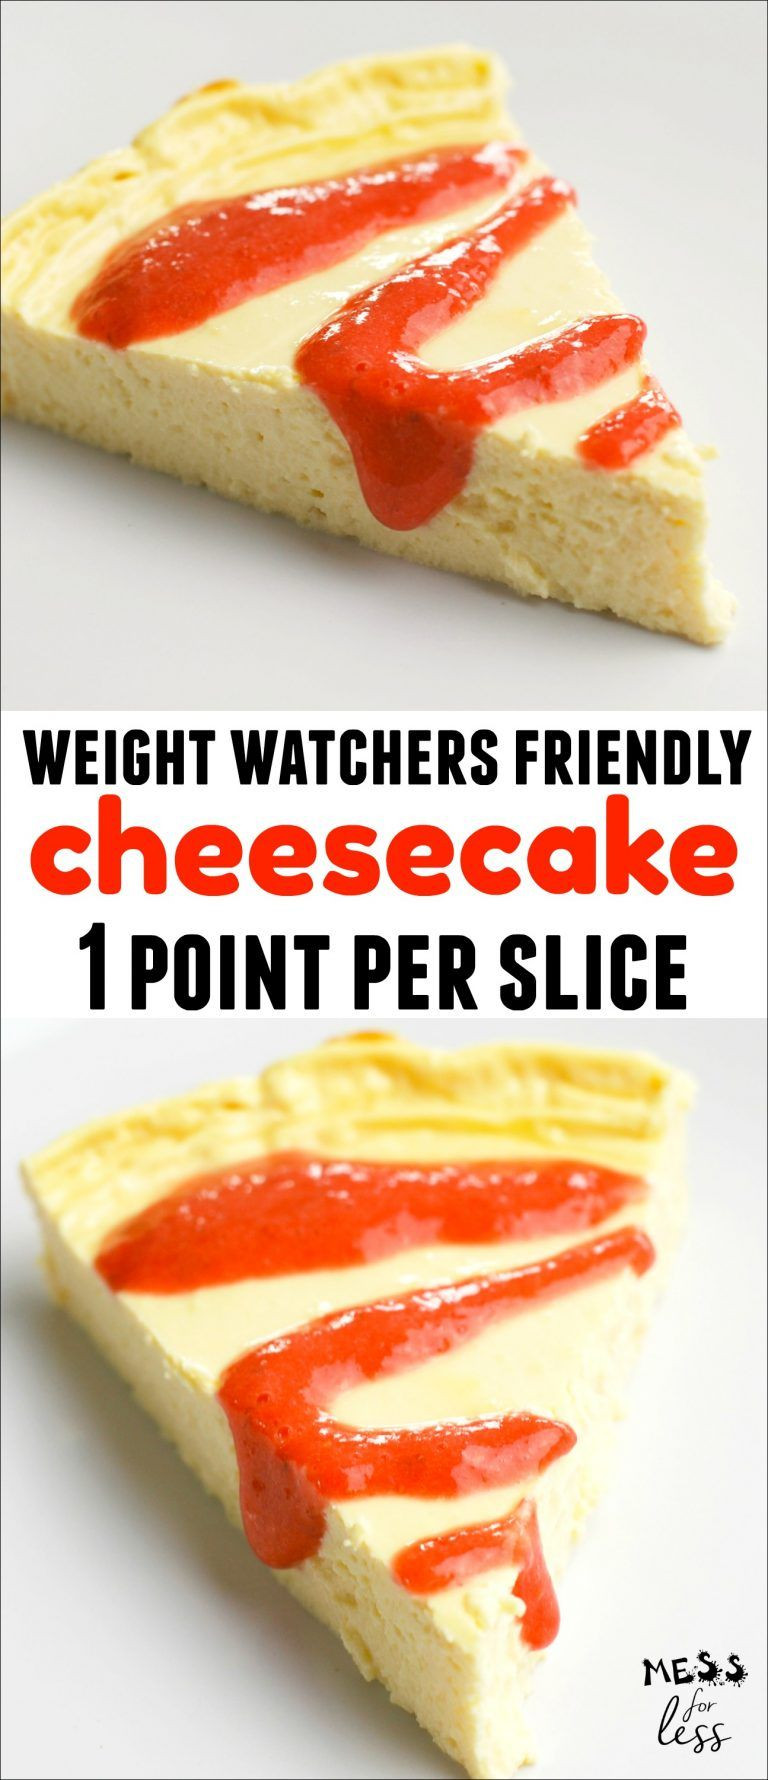 Weight Watchers Friendly Desserts
 Pin on Weight watchers recipes desserts